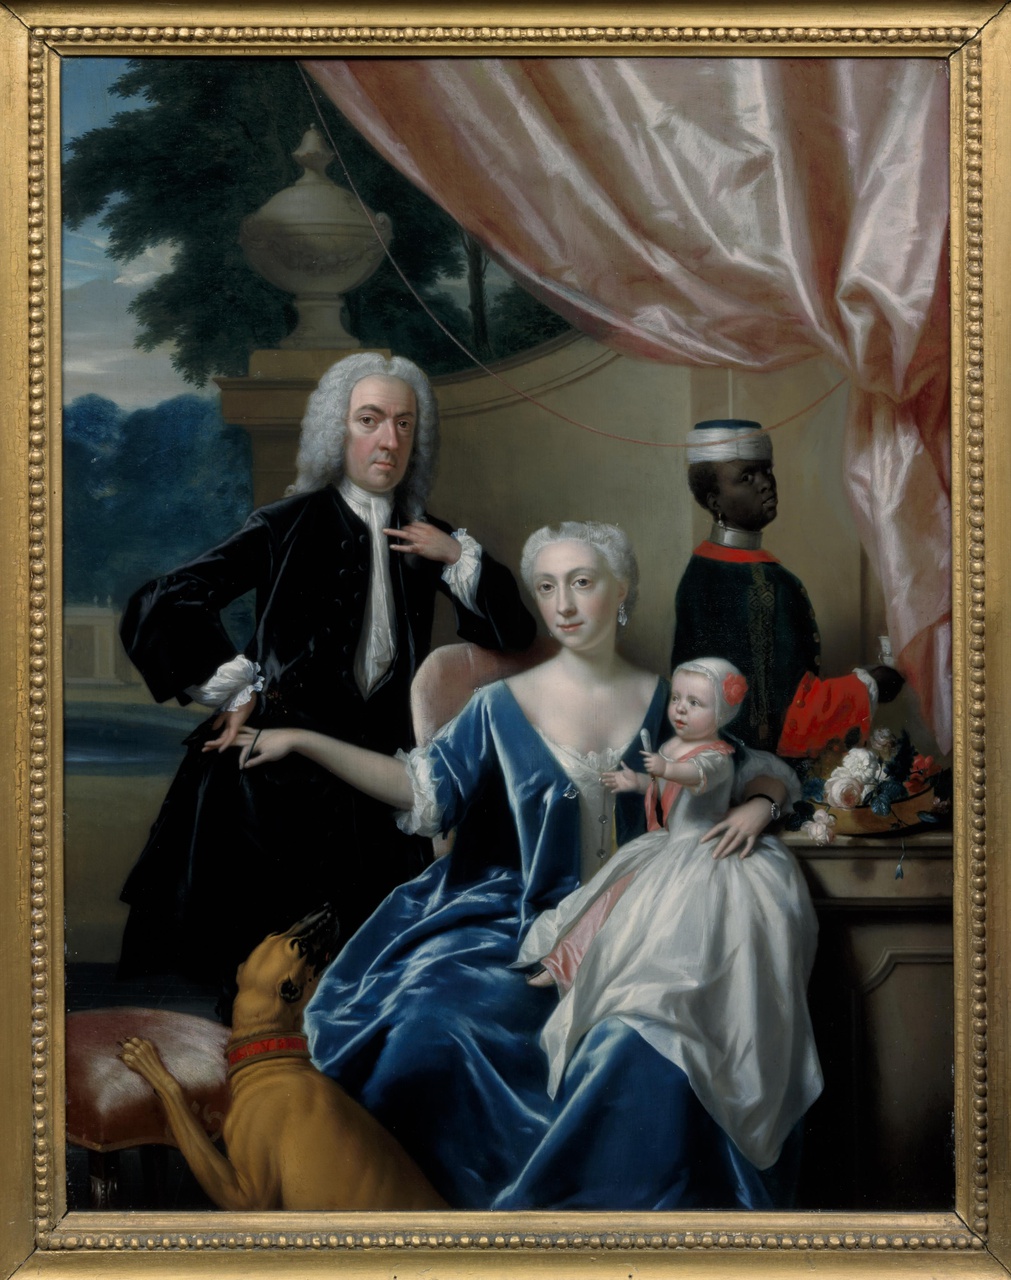 Portret van Johan Frederik van Friesheim (1685-1747), Marie Aimée van Friesheim-de Rapin de Thoyras (1716-1800) en hun zoon Johan Frederik (Godfried) van Friesheim (1738-1776) met een page